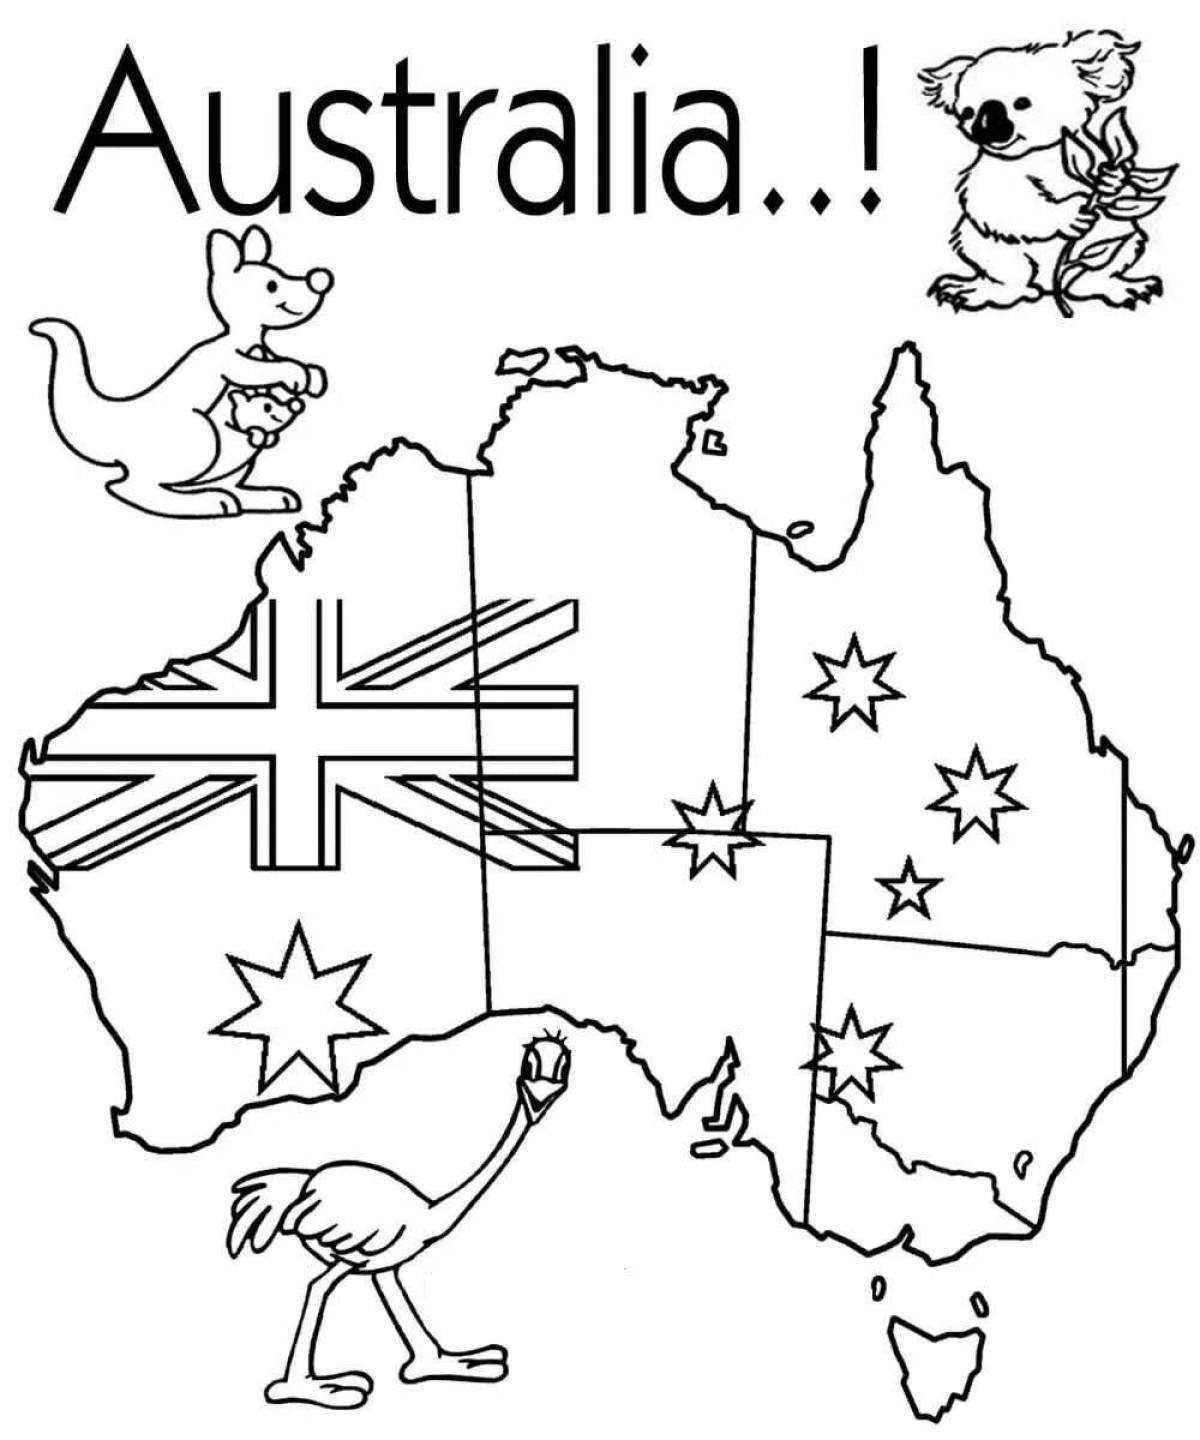 Coloring map of australia